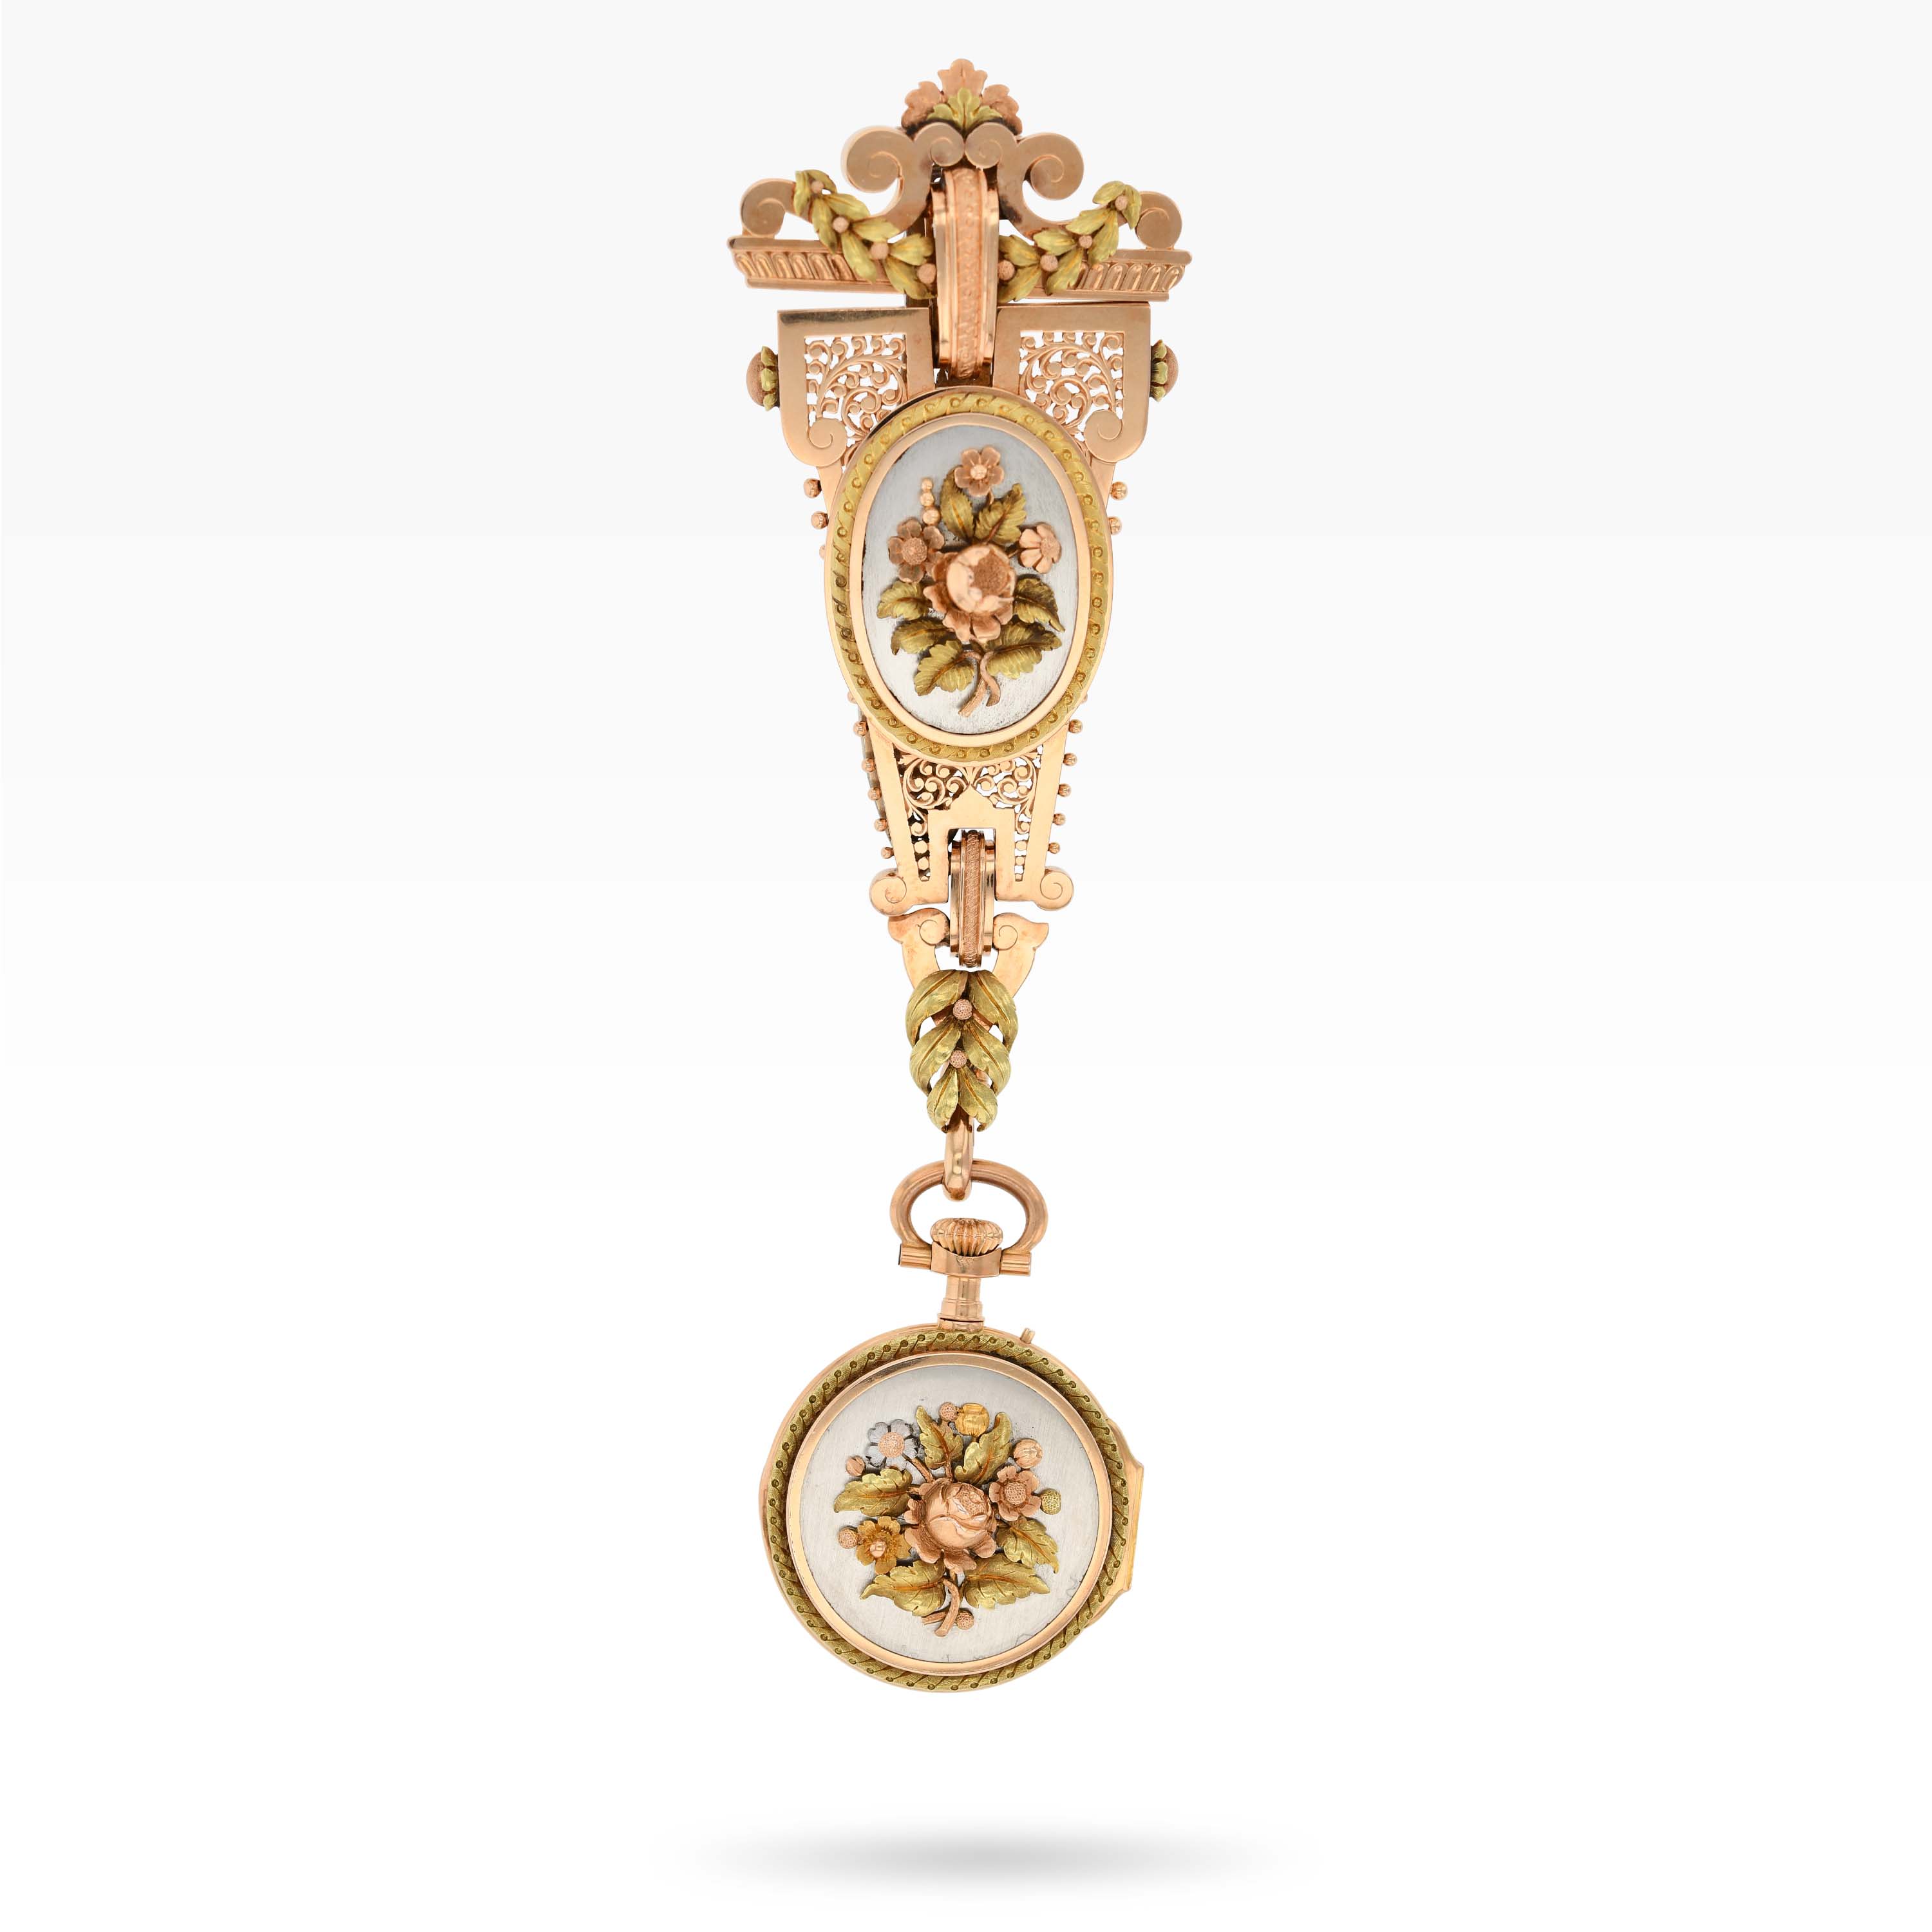 1279PW1 Chaudé Paris Pink Gold and Vari-Colour gold Pendant Watch from circa 1870 img-main1